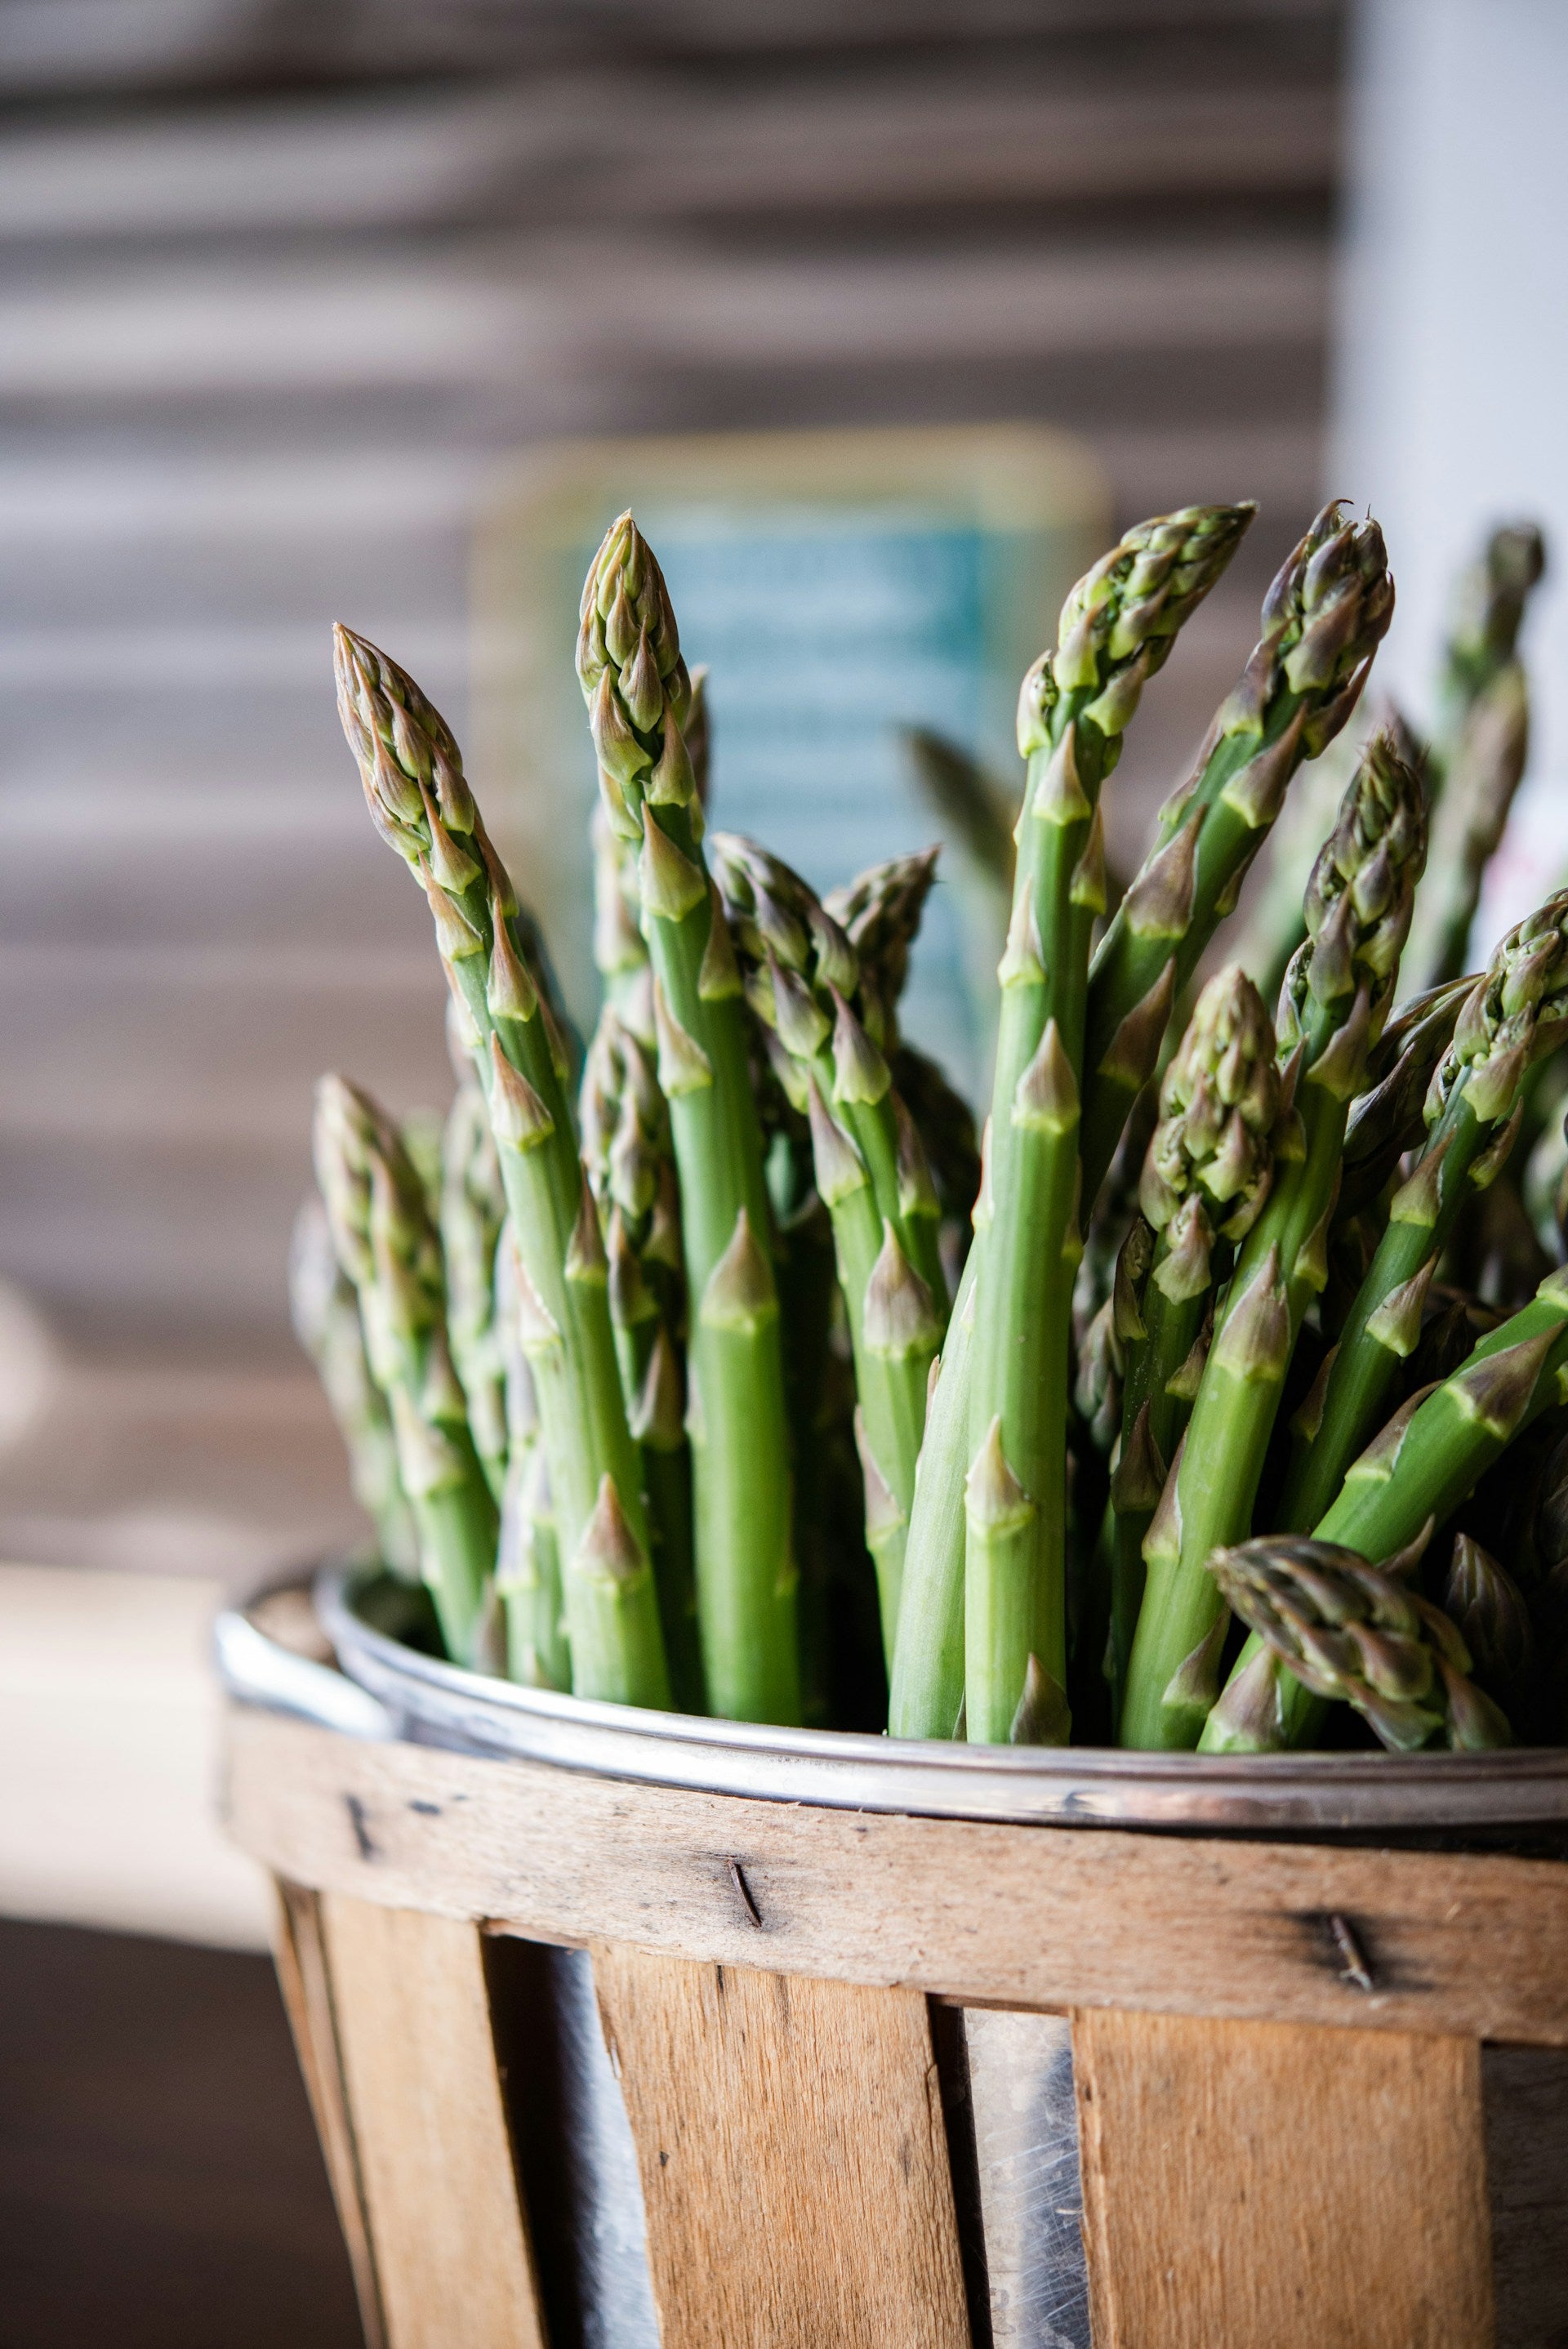 A basket of the perennial asparagus